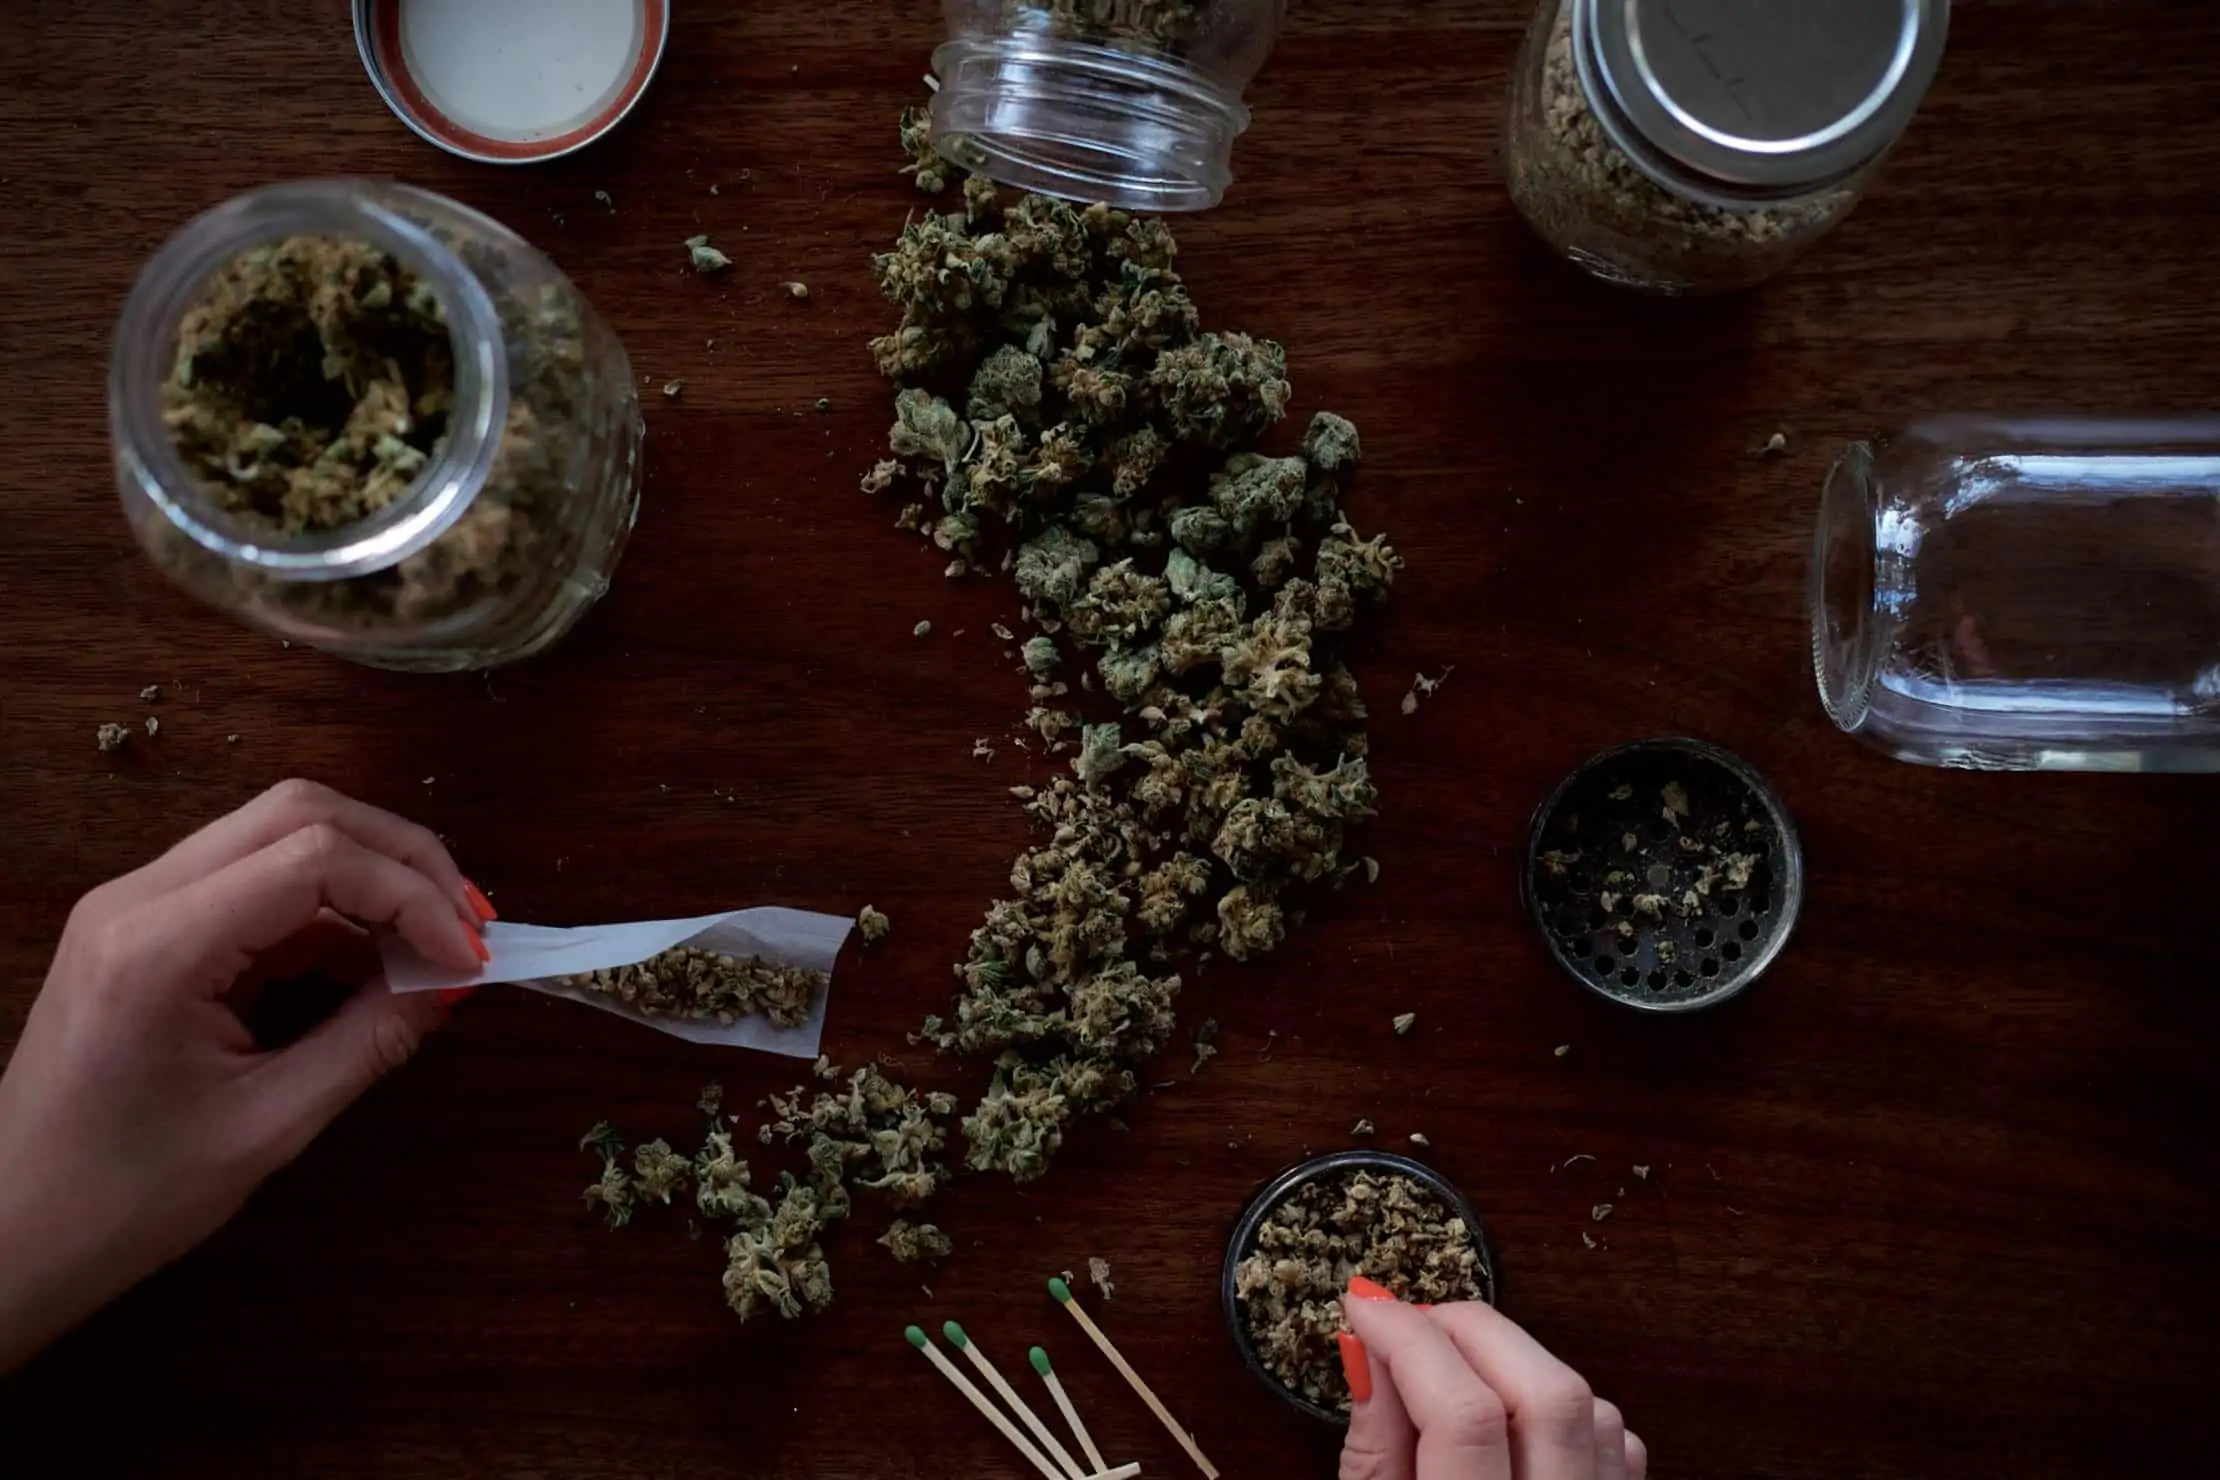 Future Concerns for Marijuana Legalization